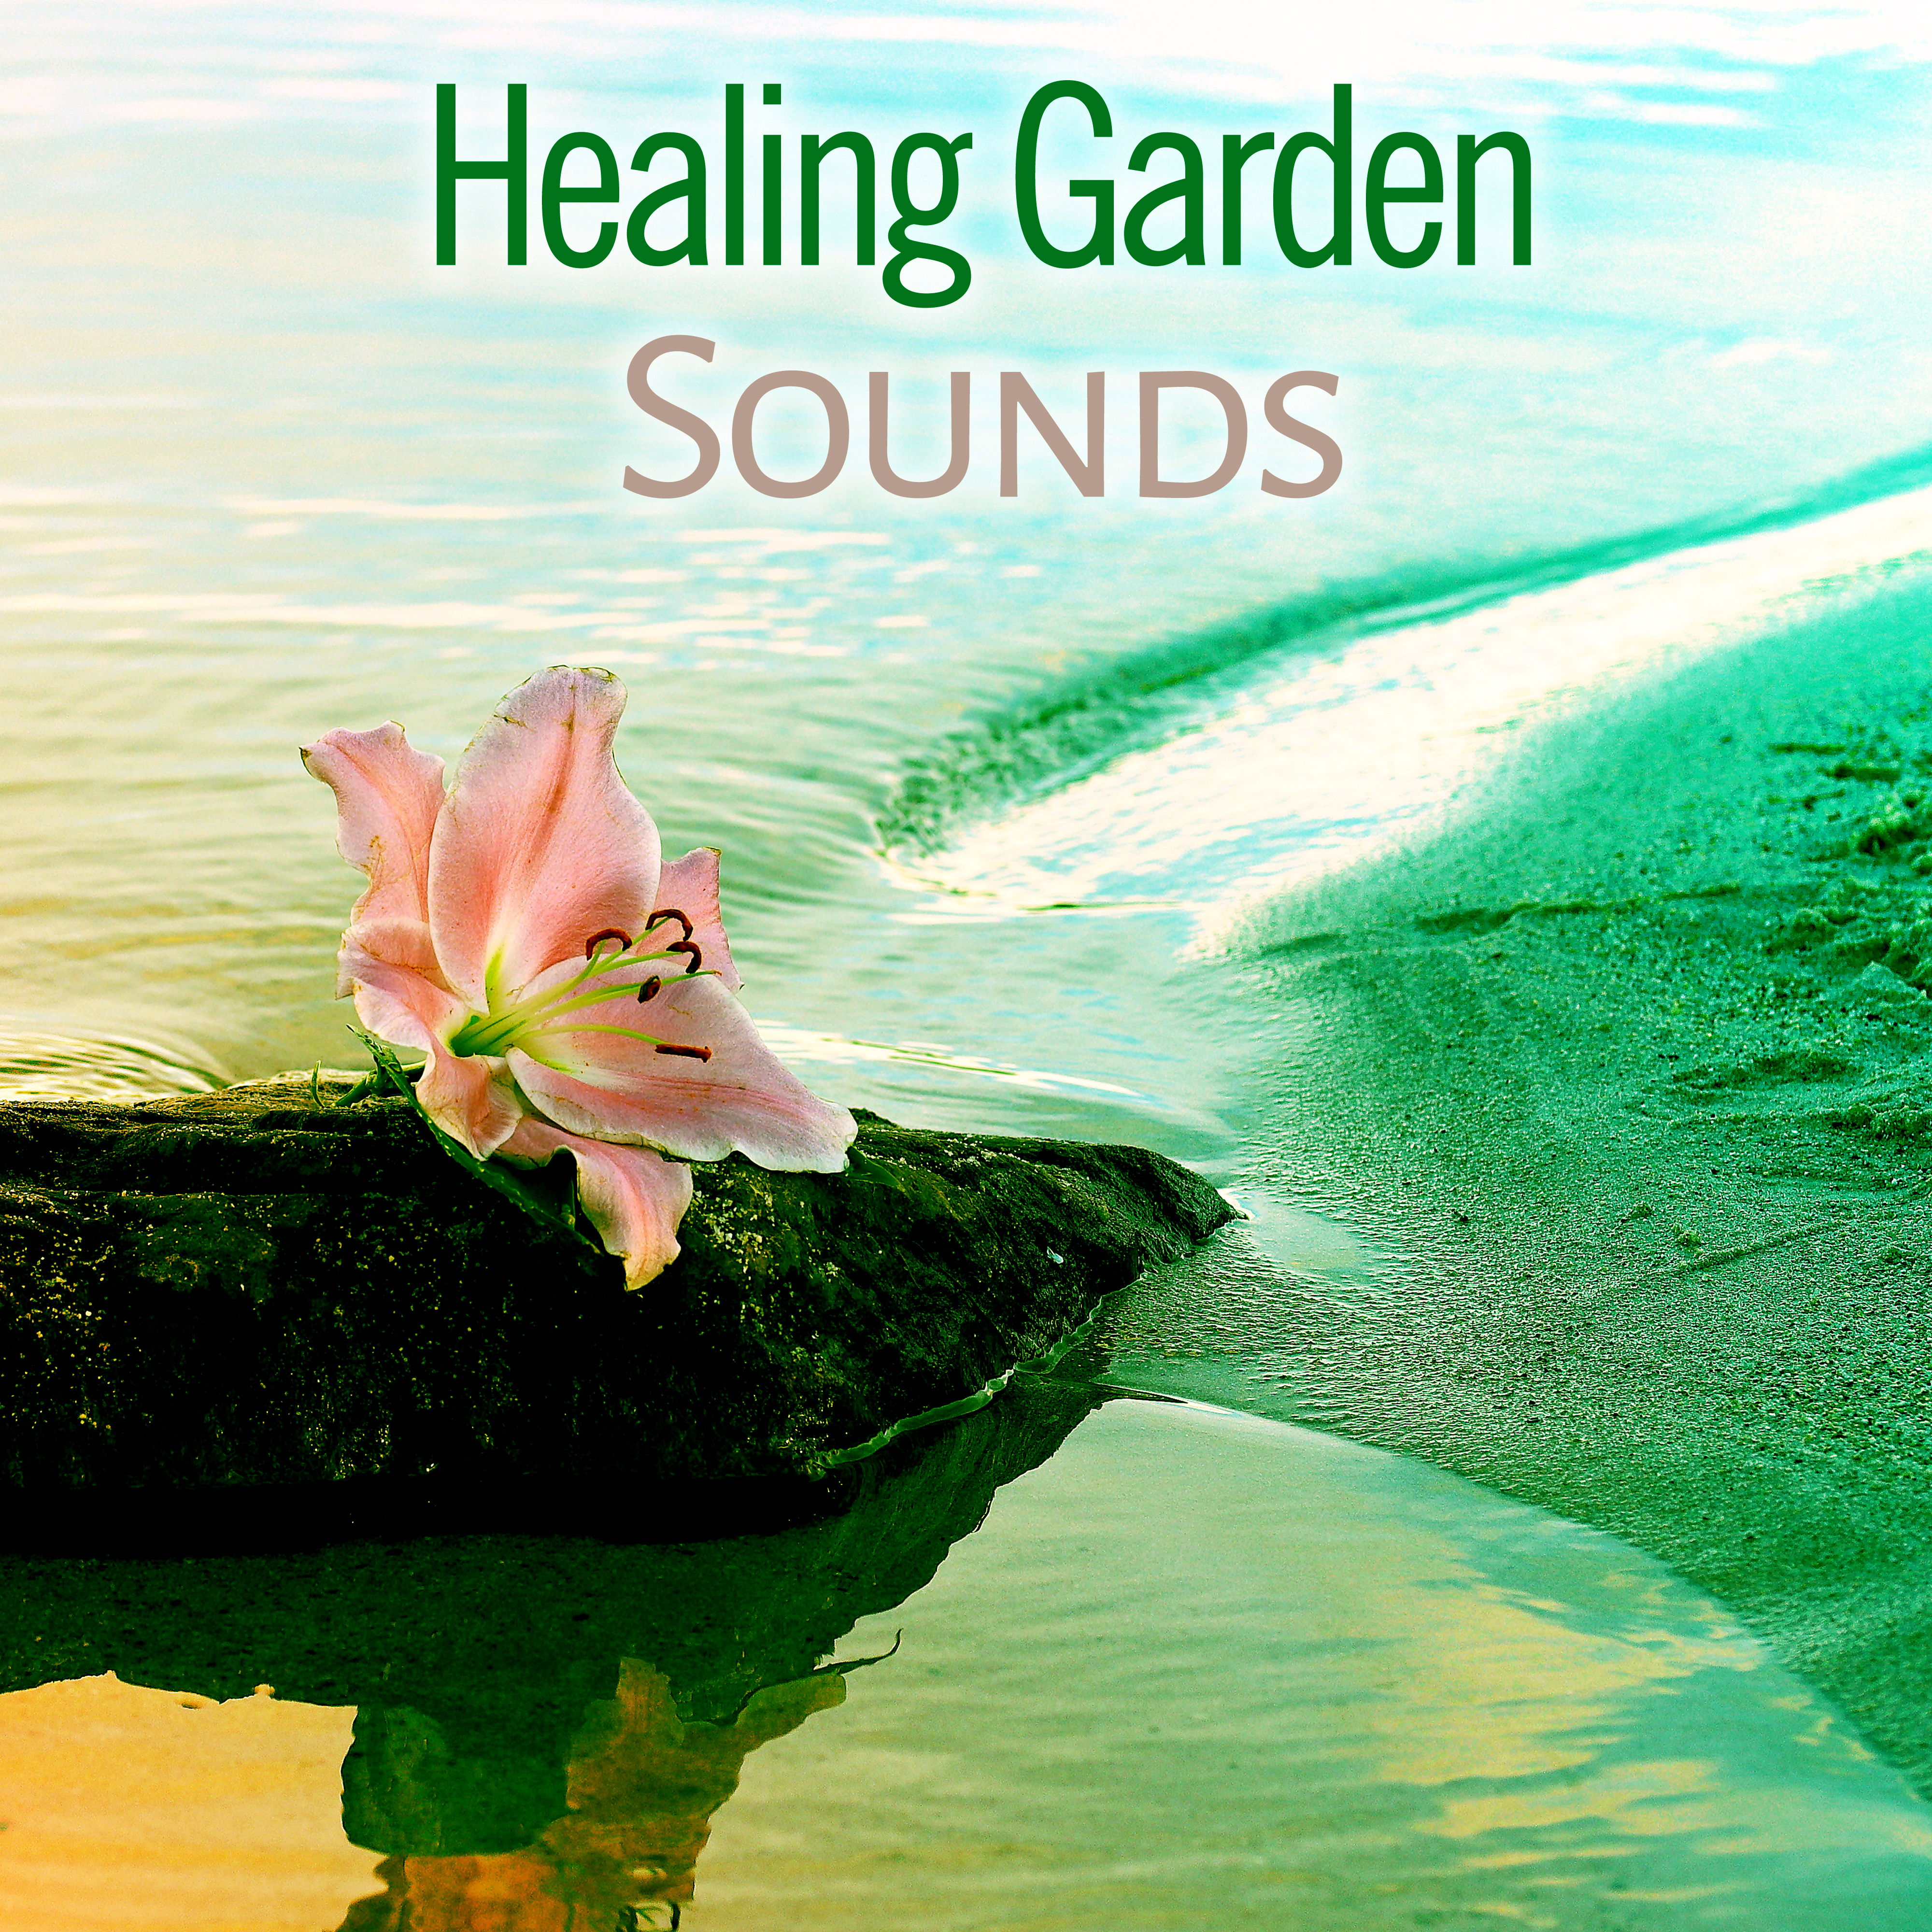 Healing Garden Sounds  Pure Nature Sounds, Relaxation Music, Spa, Massage, Music for Hotel Spa  Wellness, Deep Relaxing Music